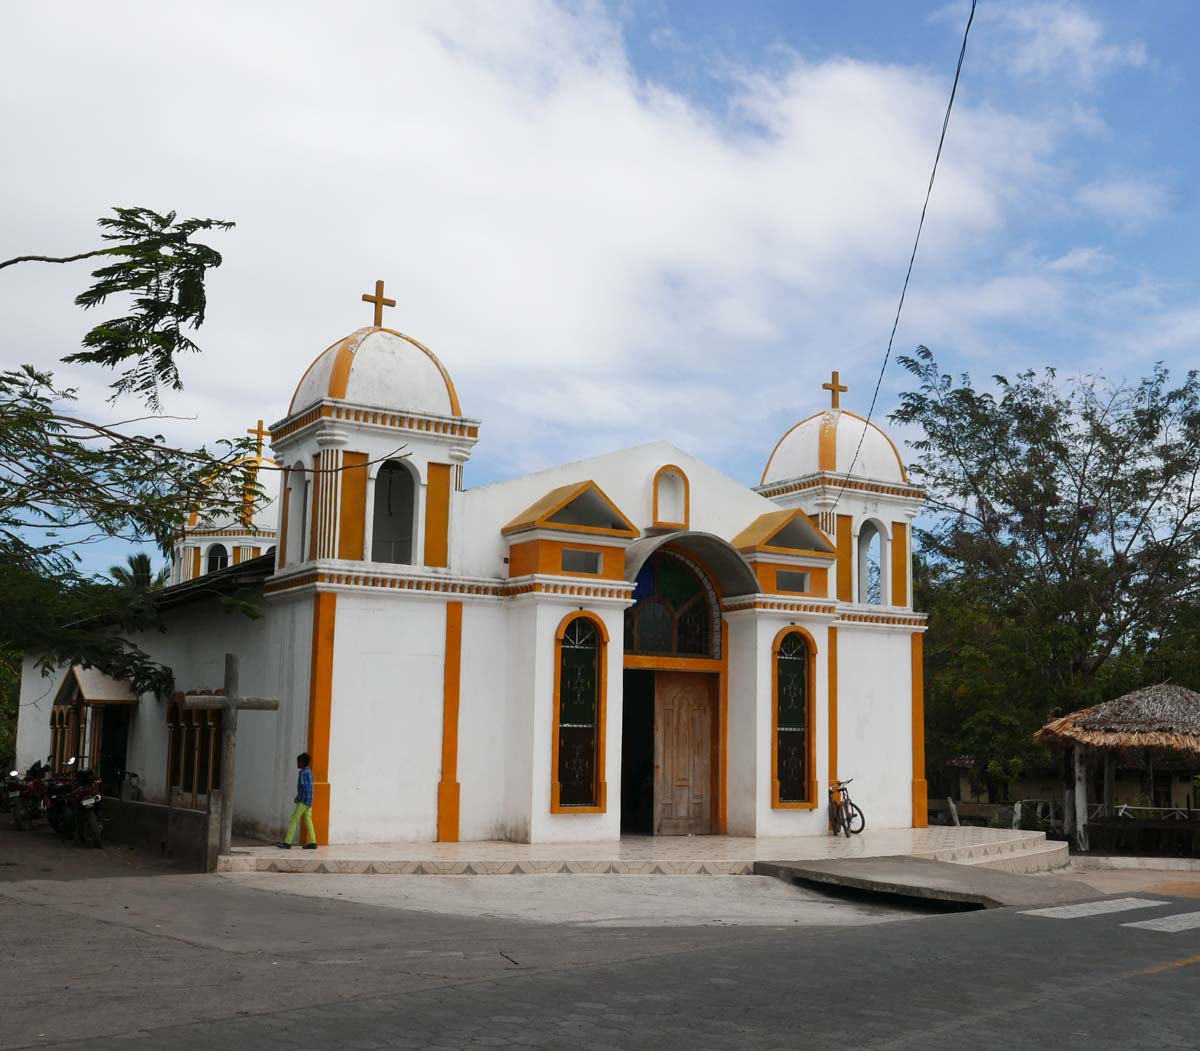 Small church in Urbaite village on Ometepe island in Nicaragua